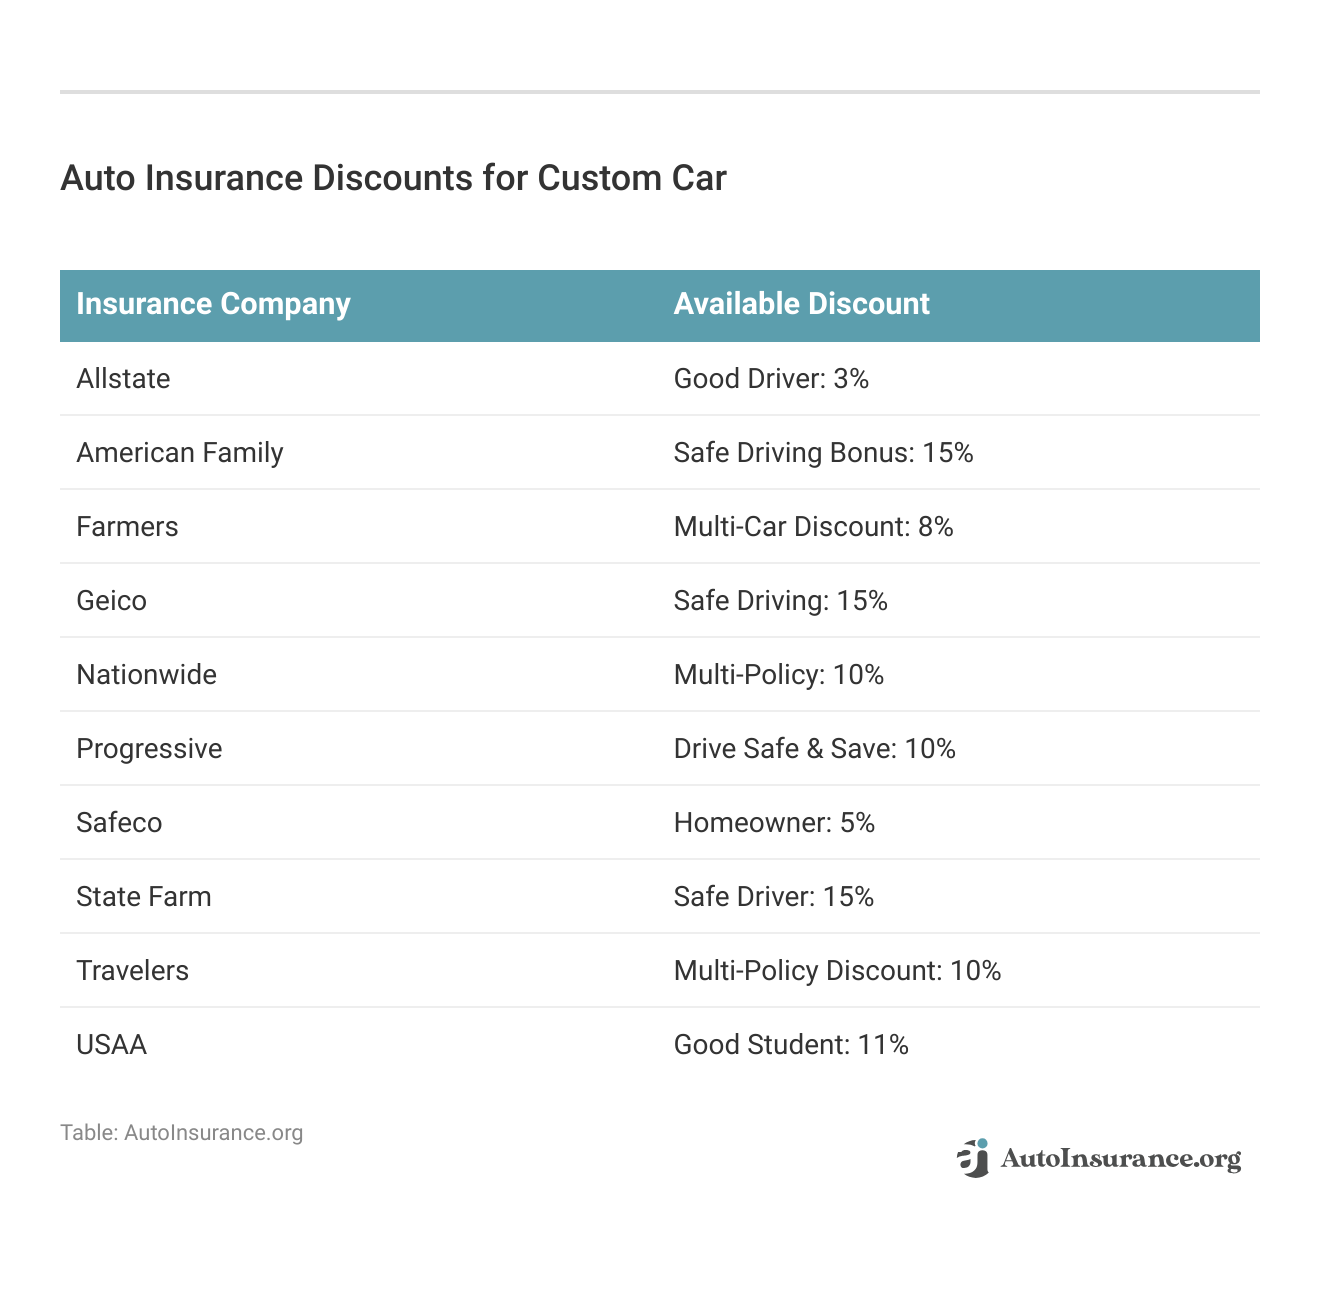 <h3>Auto Insurance Discounts for Custom Car</h3>